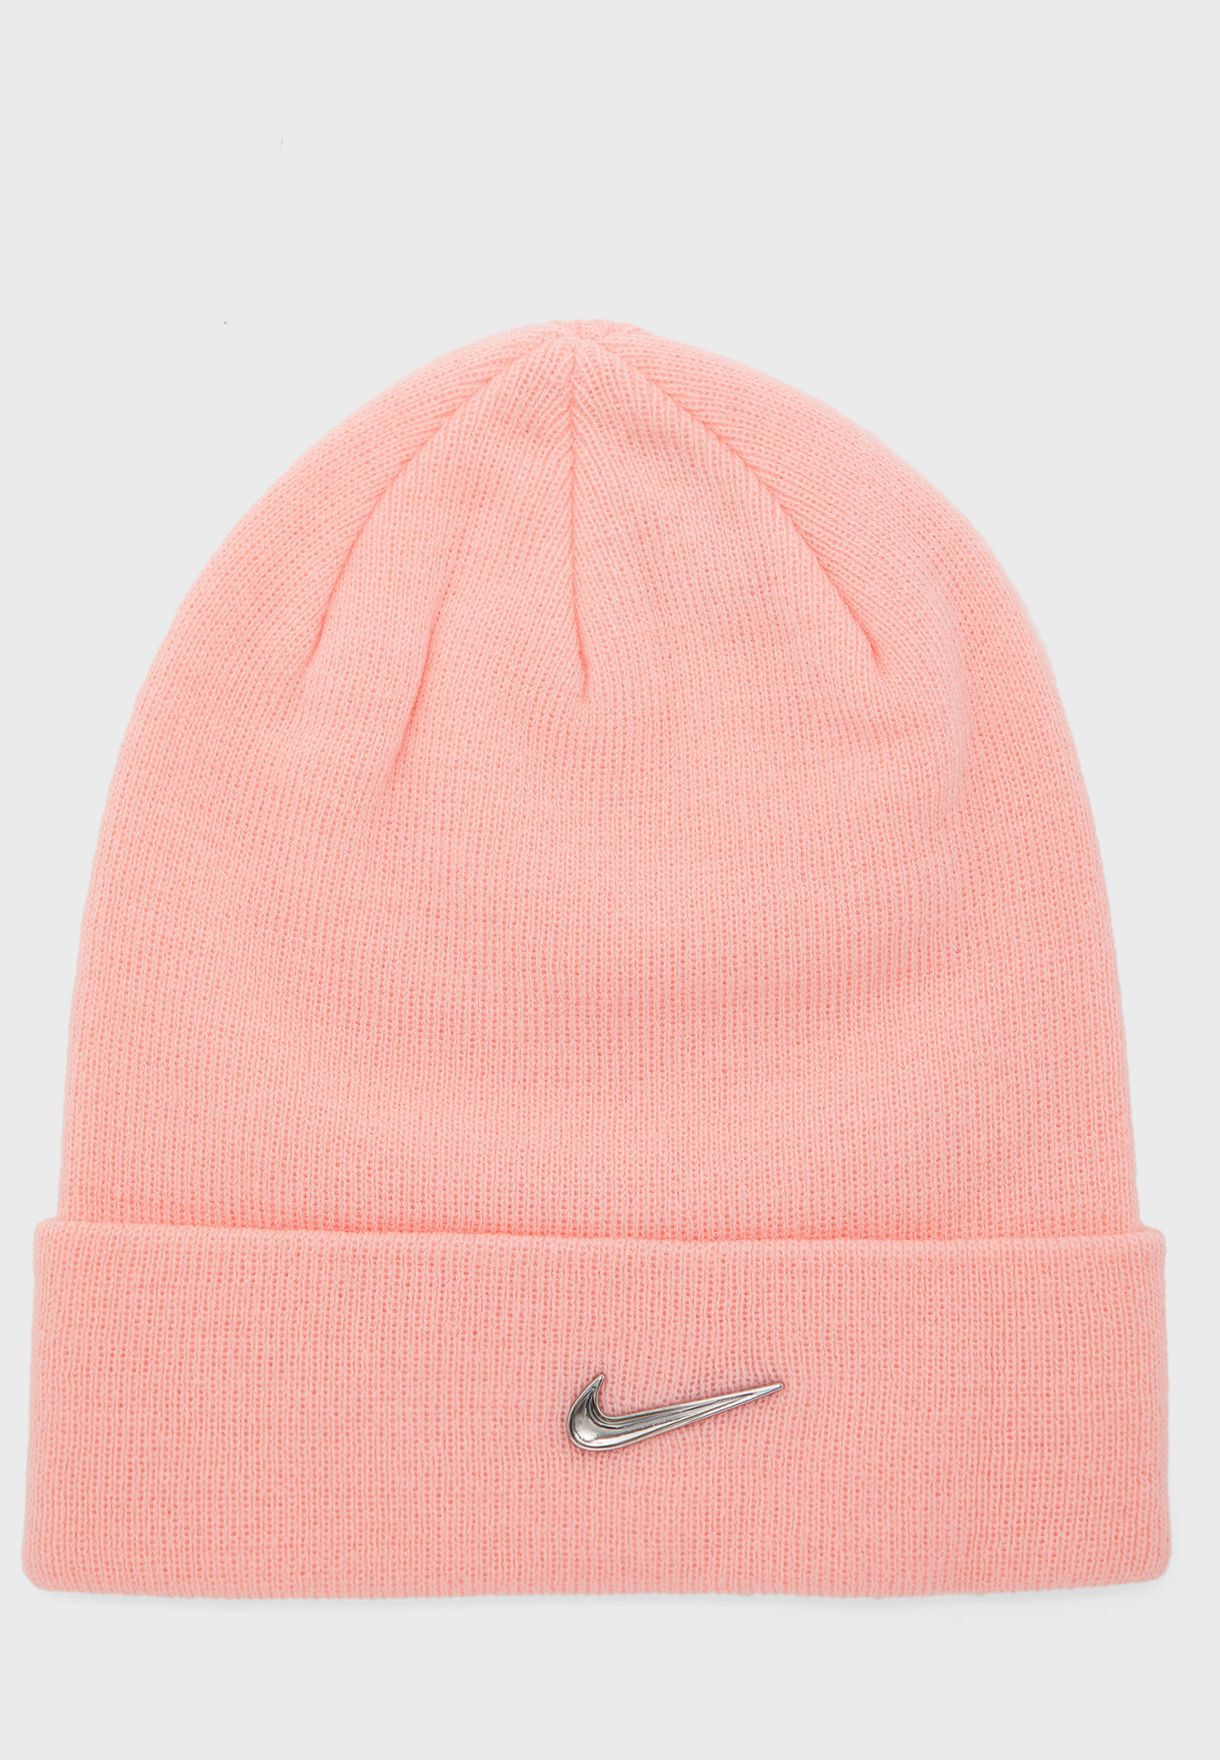 Buy Nike pink Metal Swoosh Beanie for 